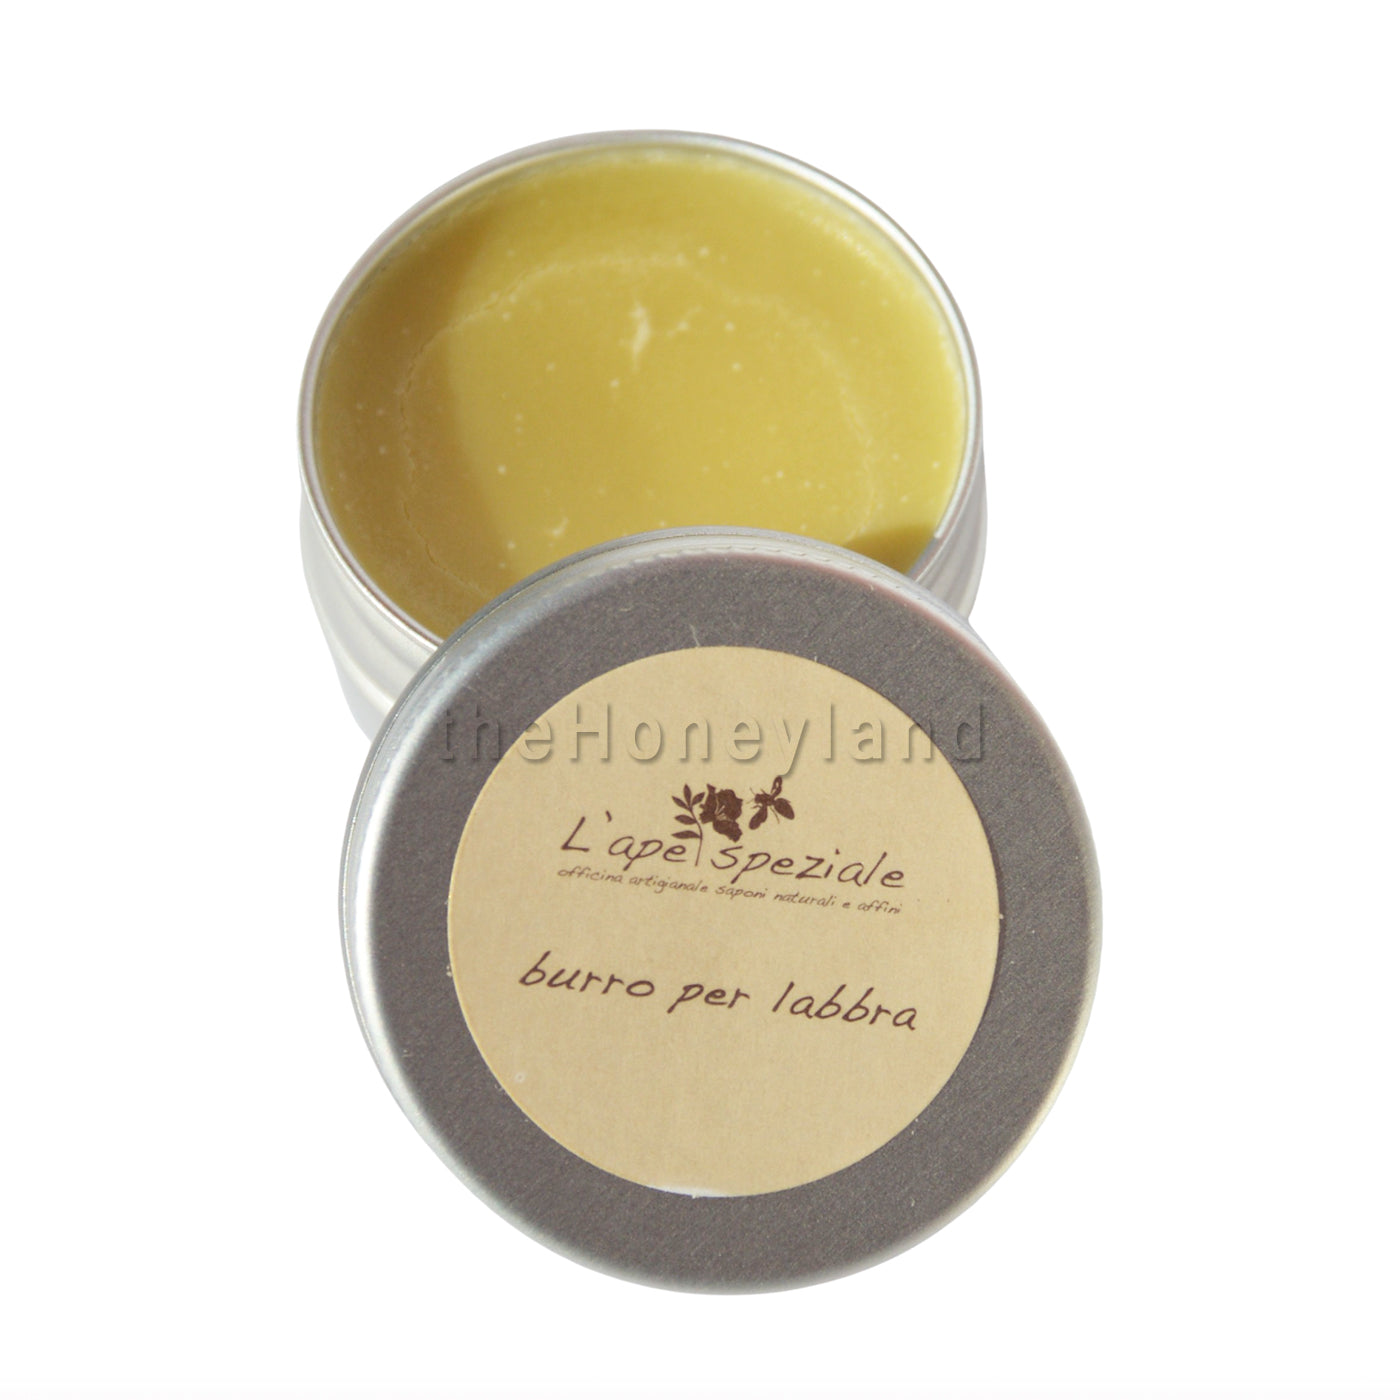 Lip balm with organic beeswax, EVO oil and orange